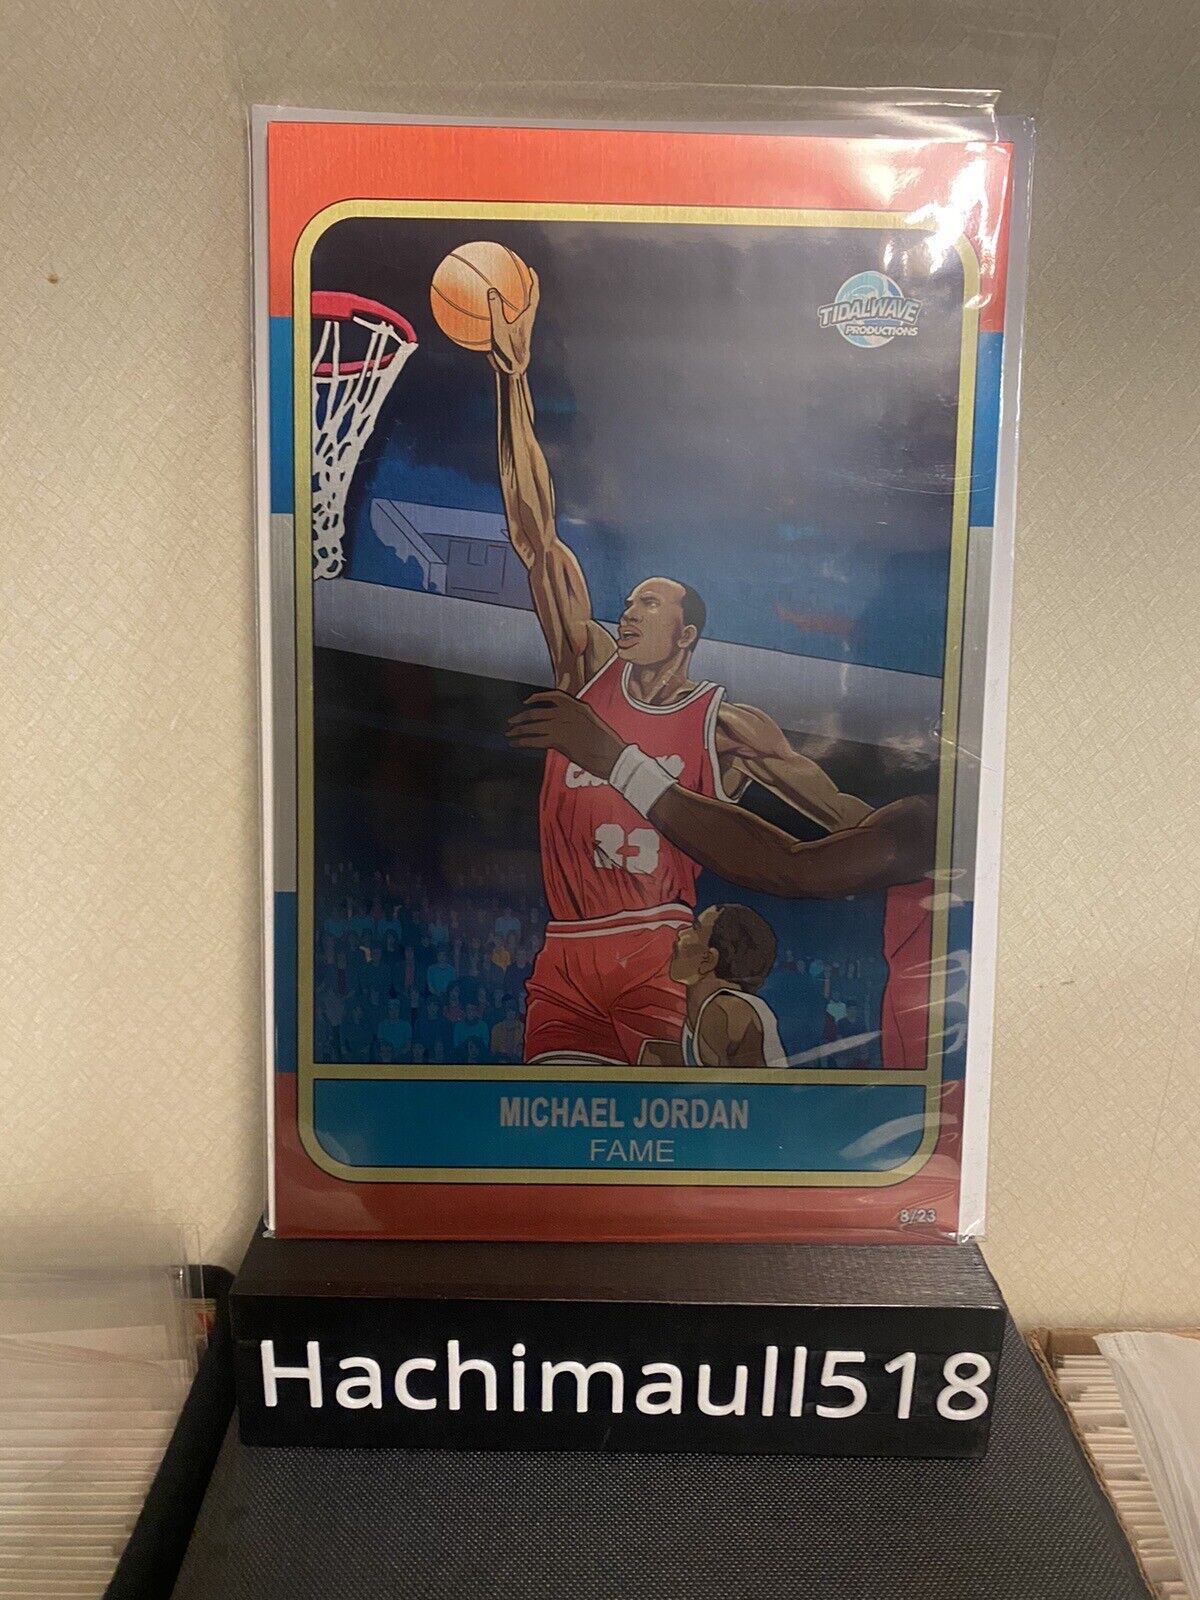 Fame: Michael Jordan 1 Rookie Card Metal C2E2 2024 Ltd 8/23 NM Ships 4/30